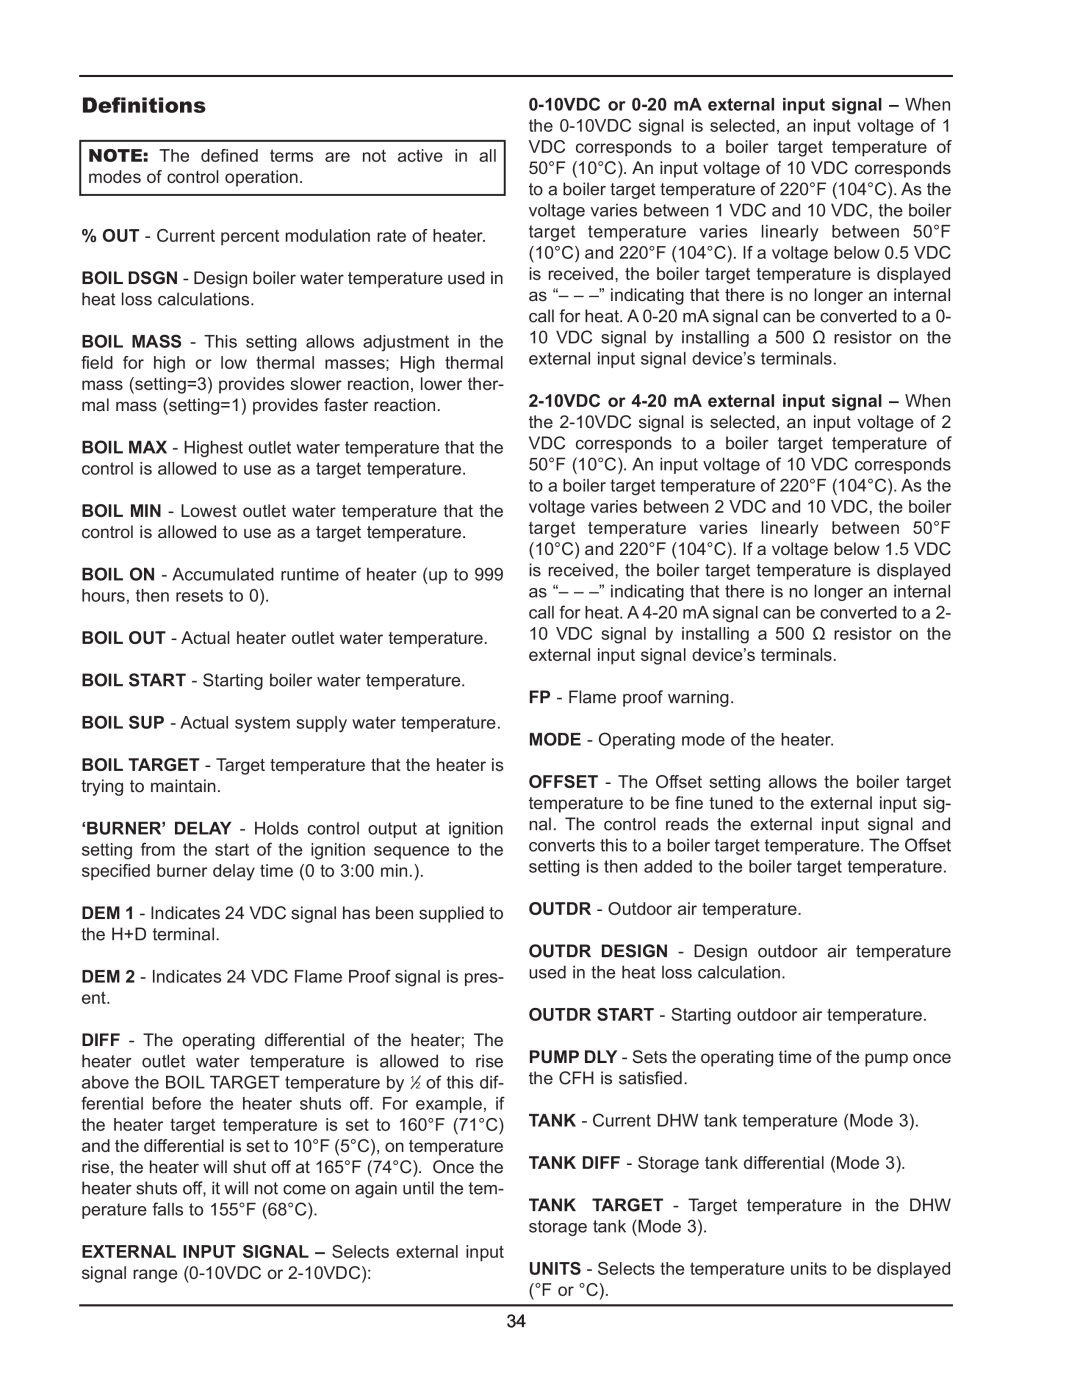 Raypak 503-2003 manual Definitions 